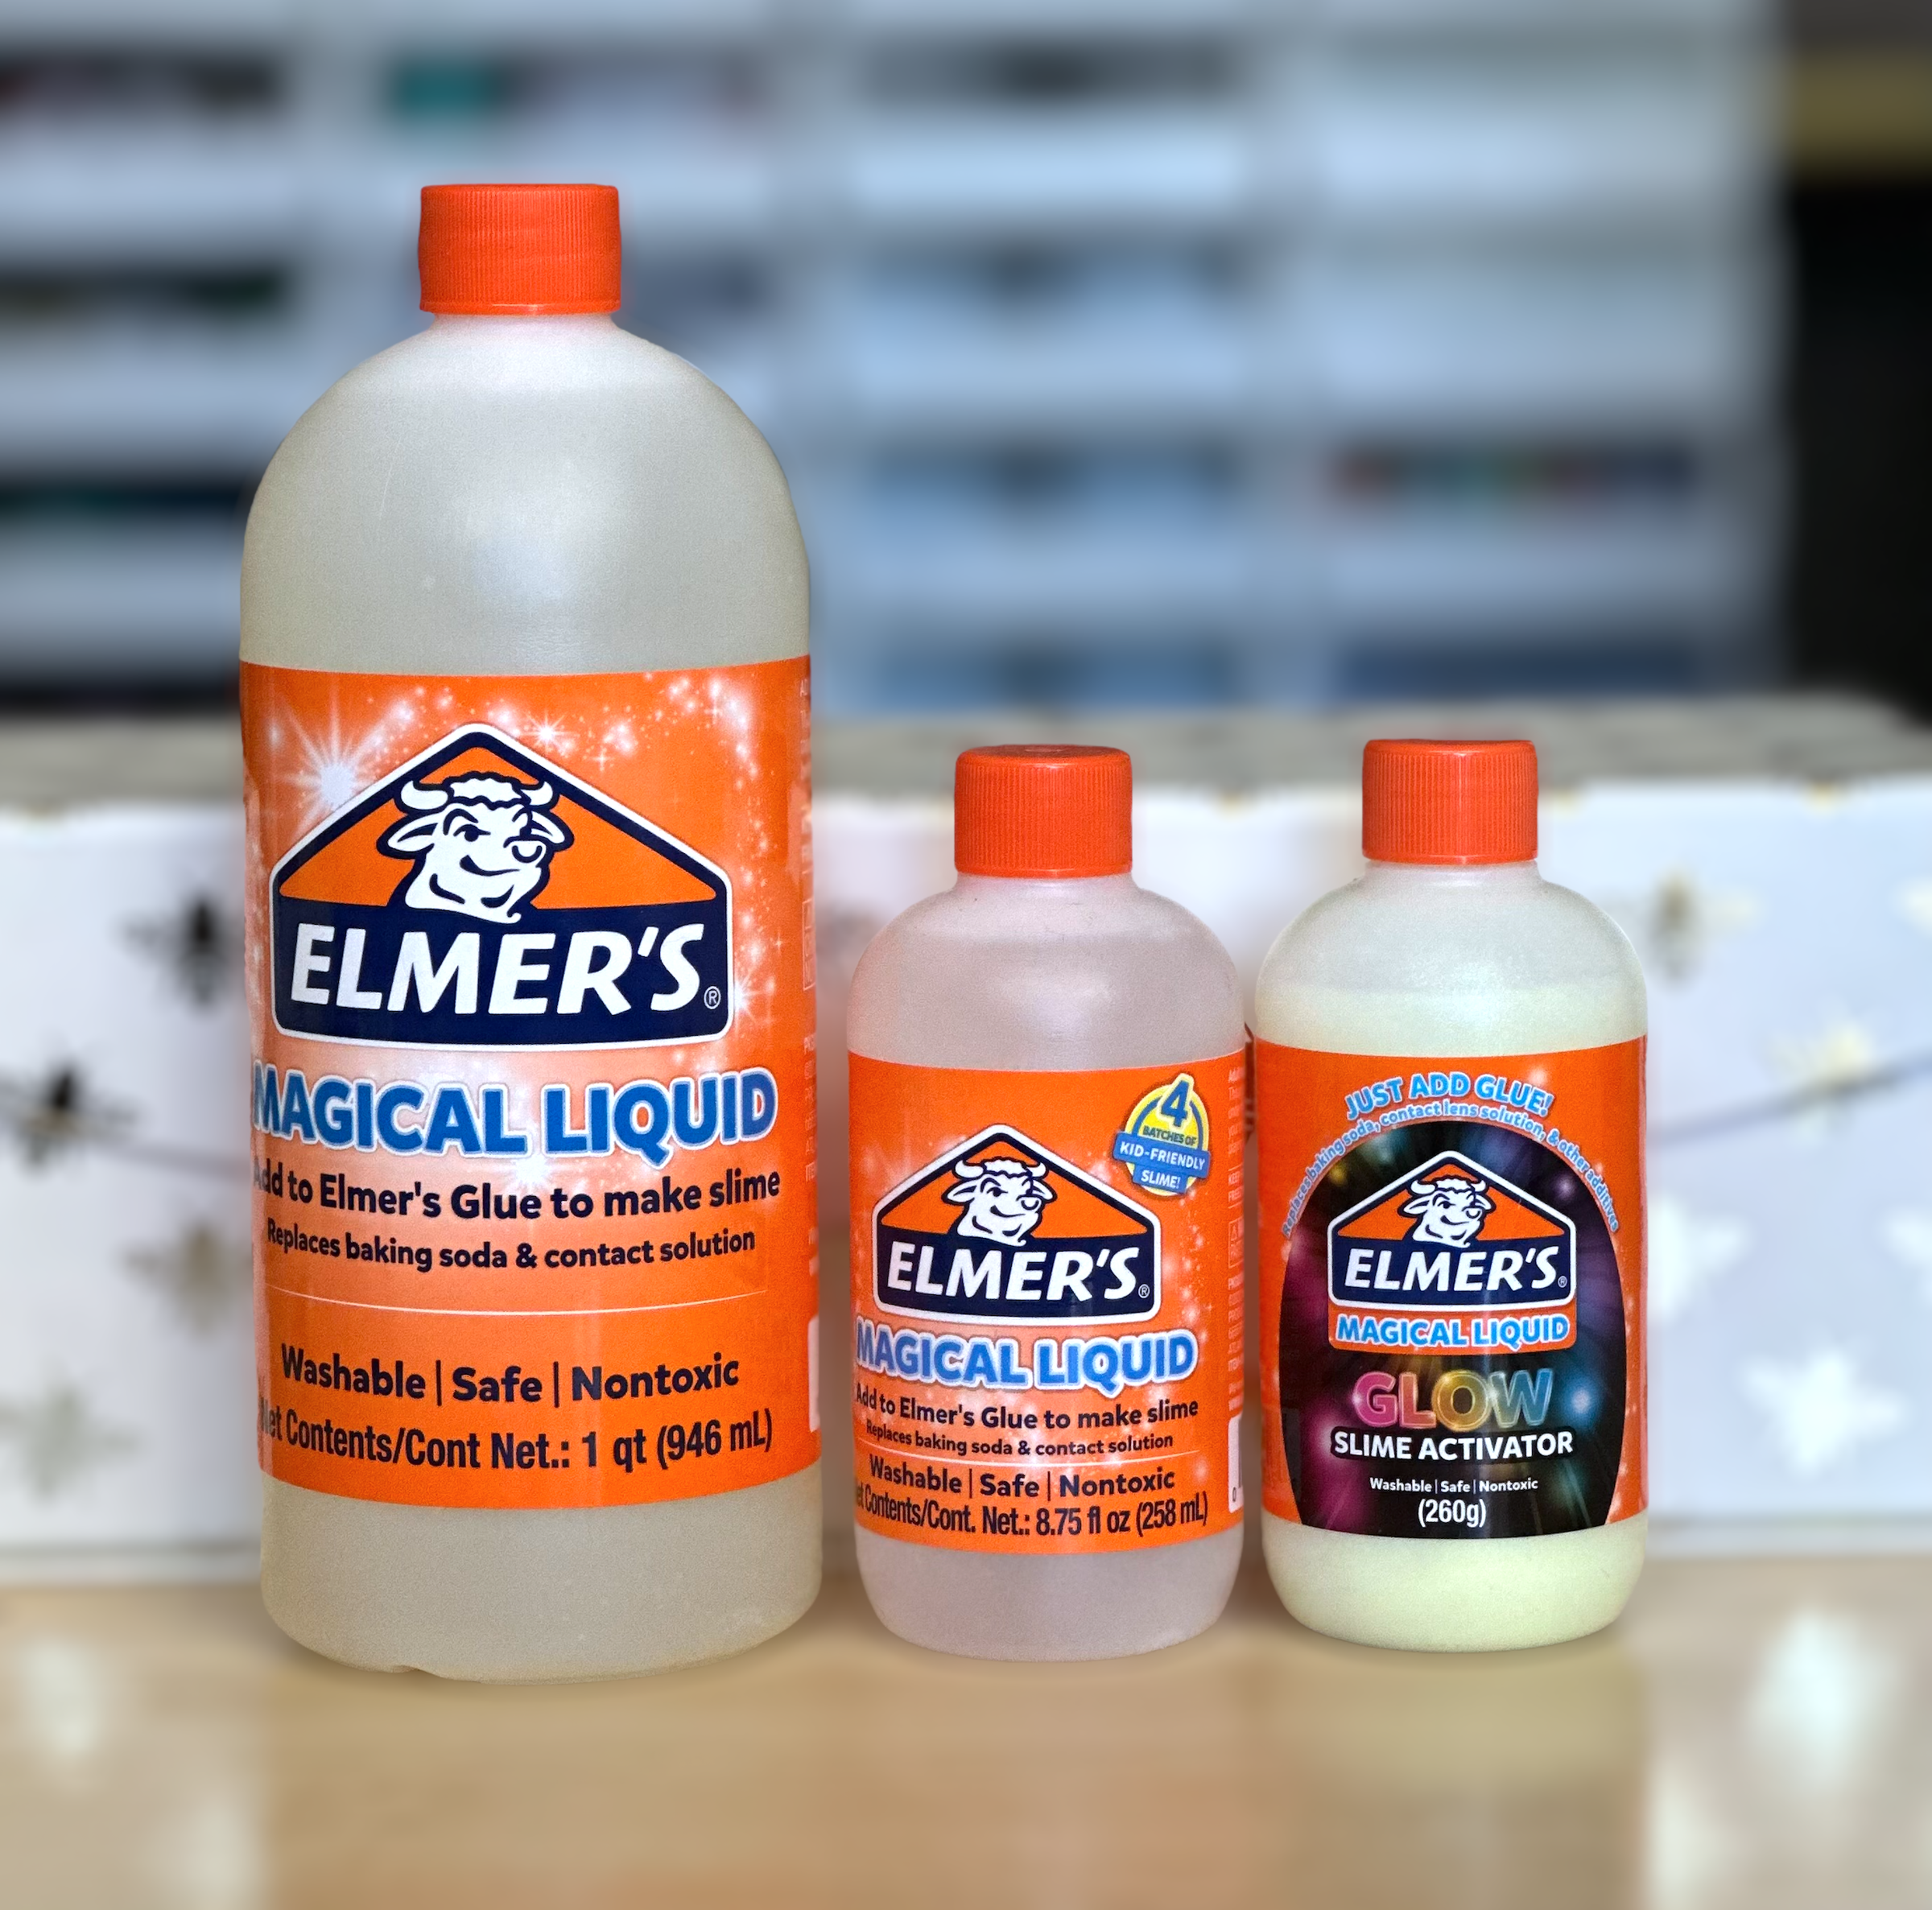 Elmer's Magical Liquid Activator Solution, 8.75 fl. oz. Bottle - Great for  Making Slime